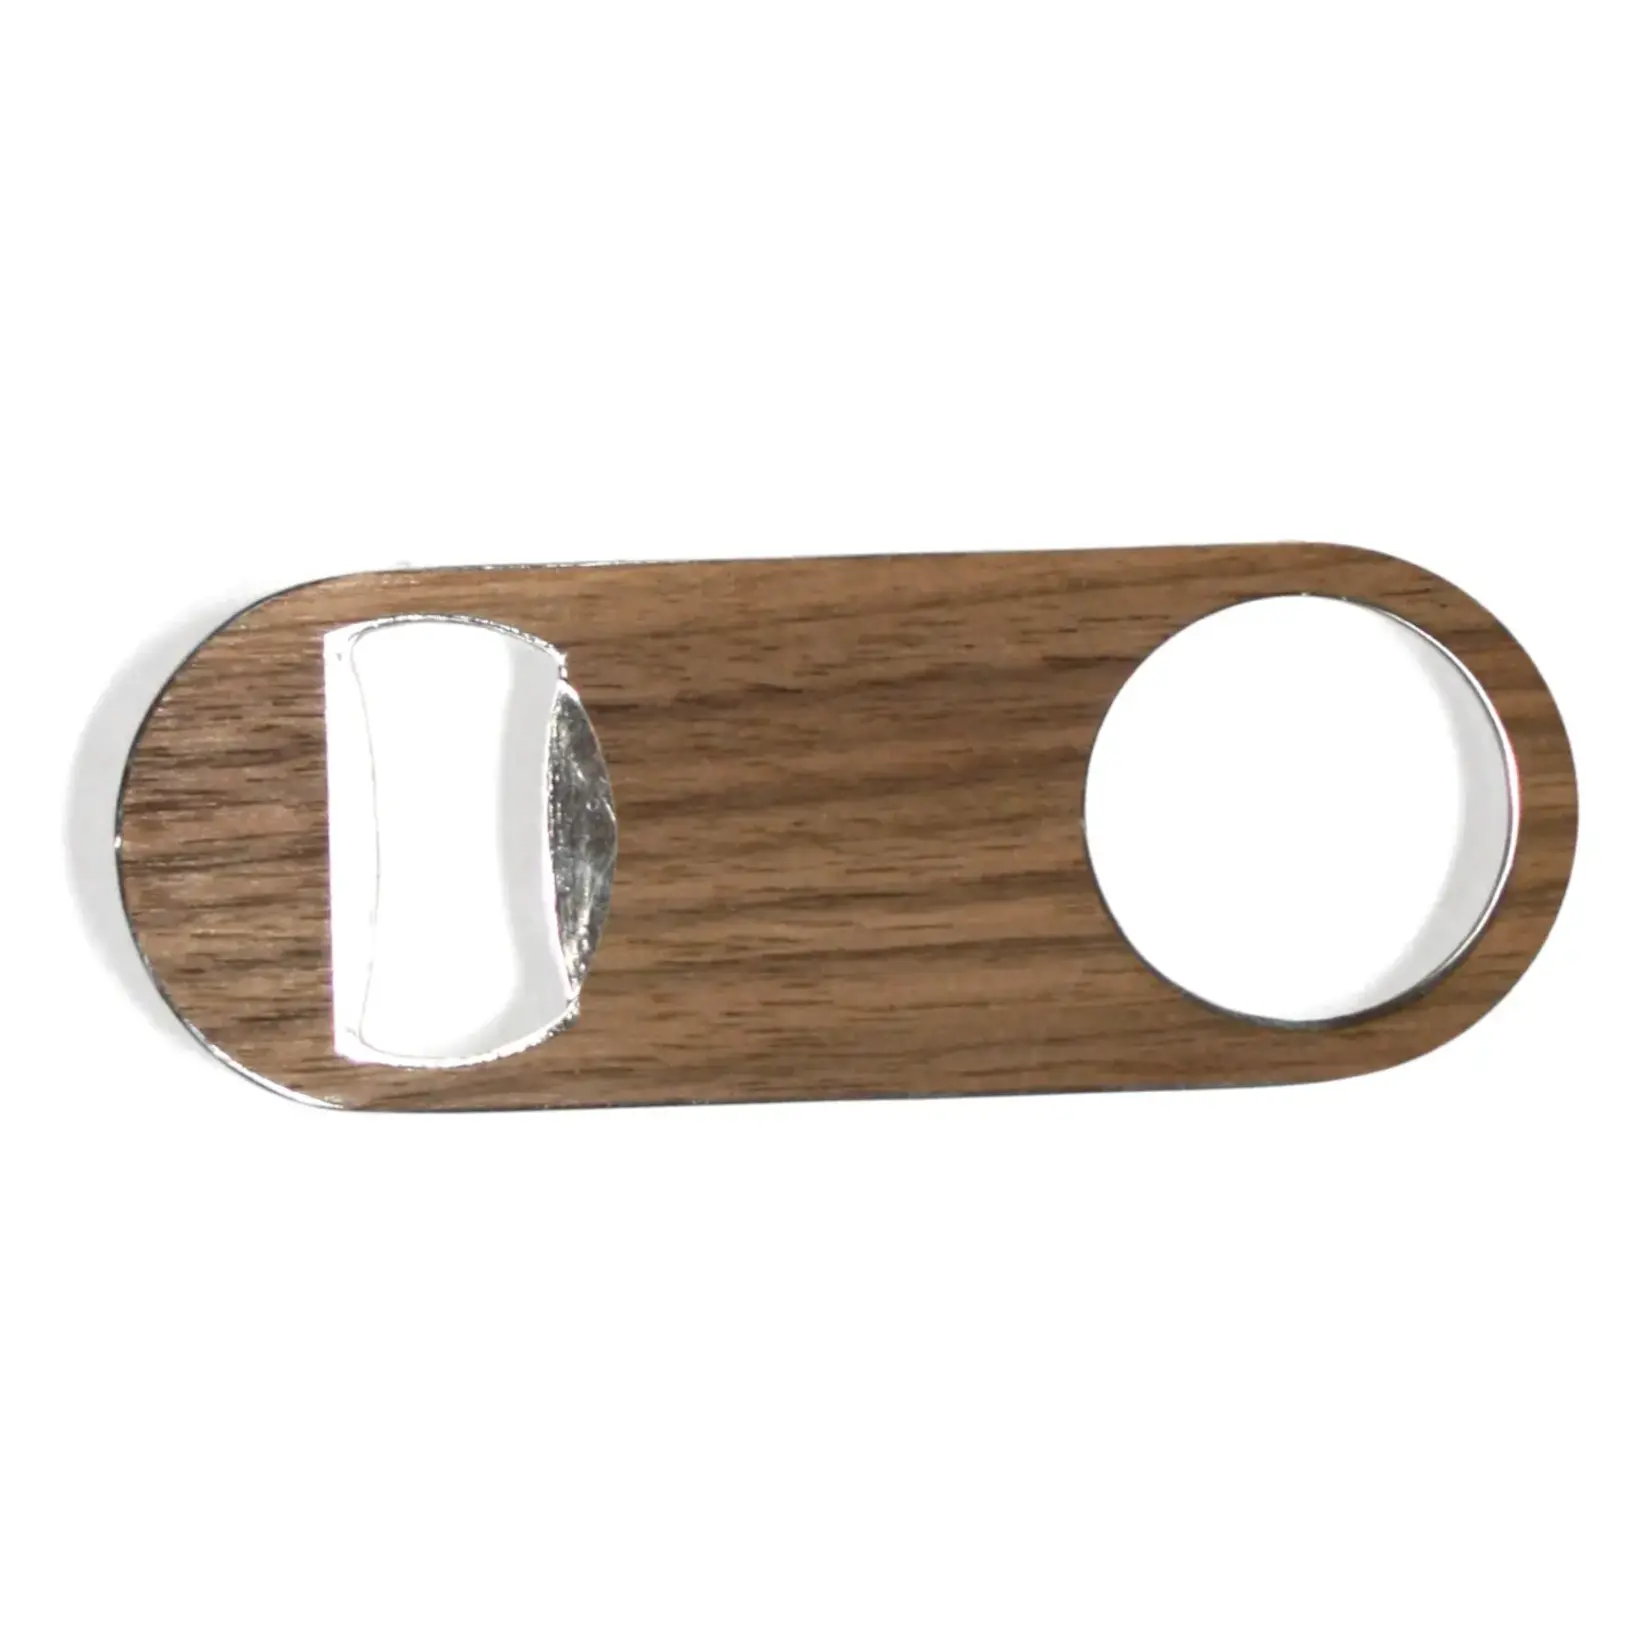 WUDN Handcrafted Wooden Keychain Bottle Opener